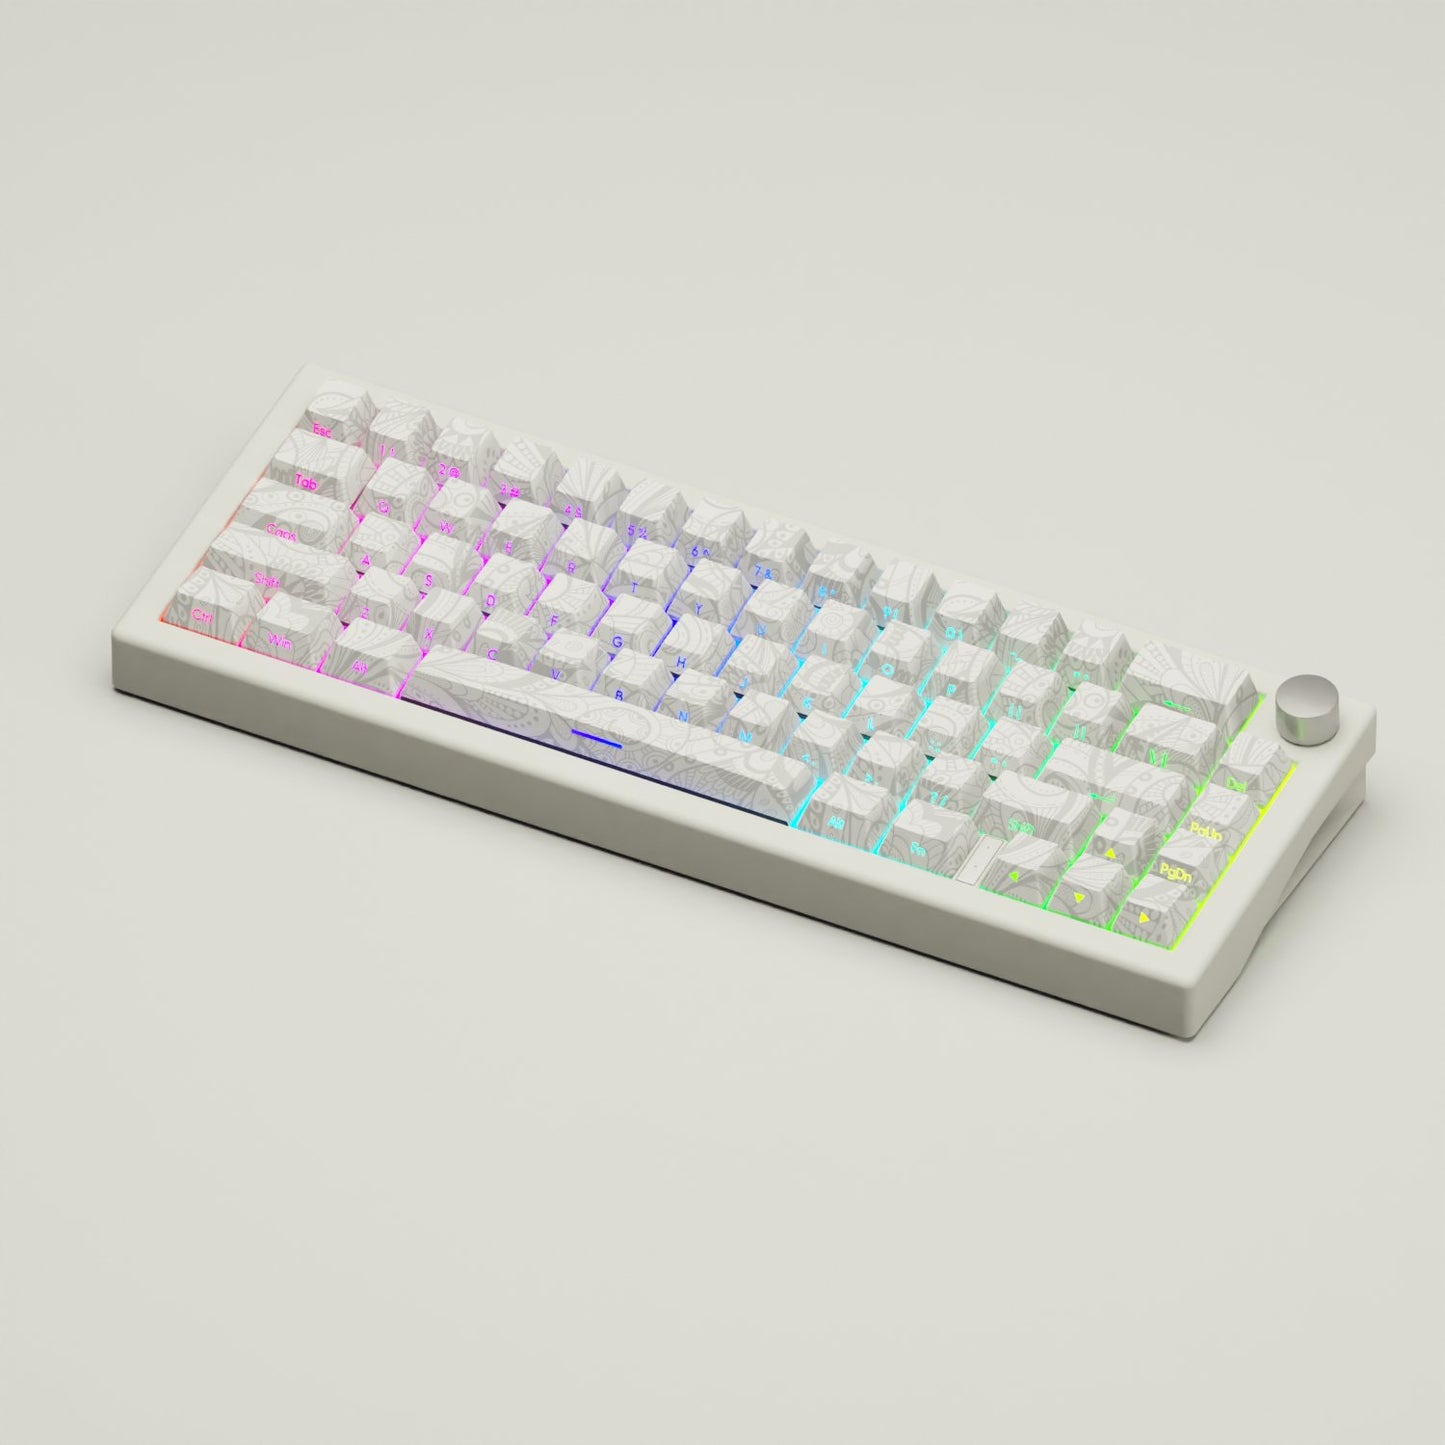 Schnellegang (WHITE) GMK67 Keyboard(65% Mechanical Keyboard with knob) - Goblintechkeys